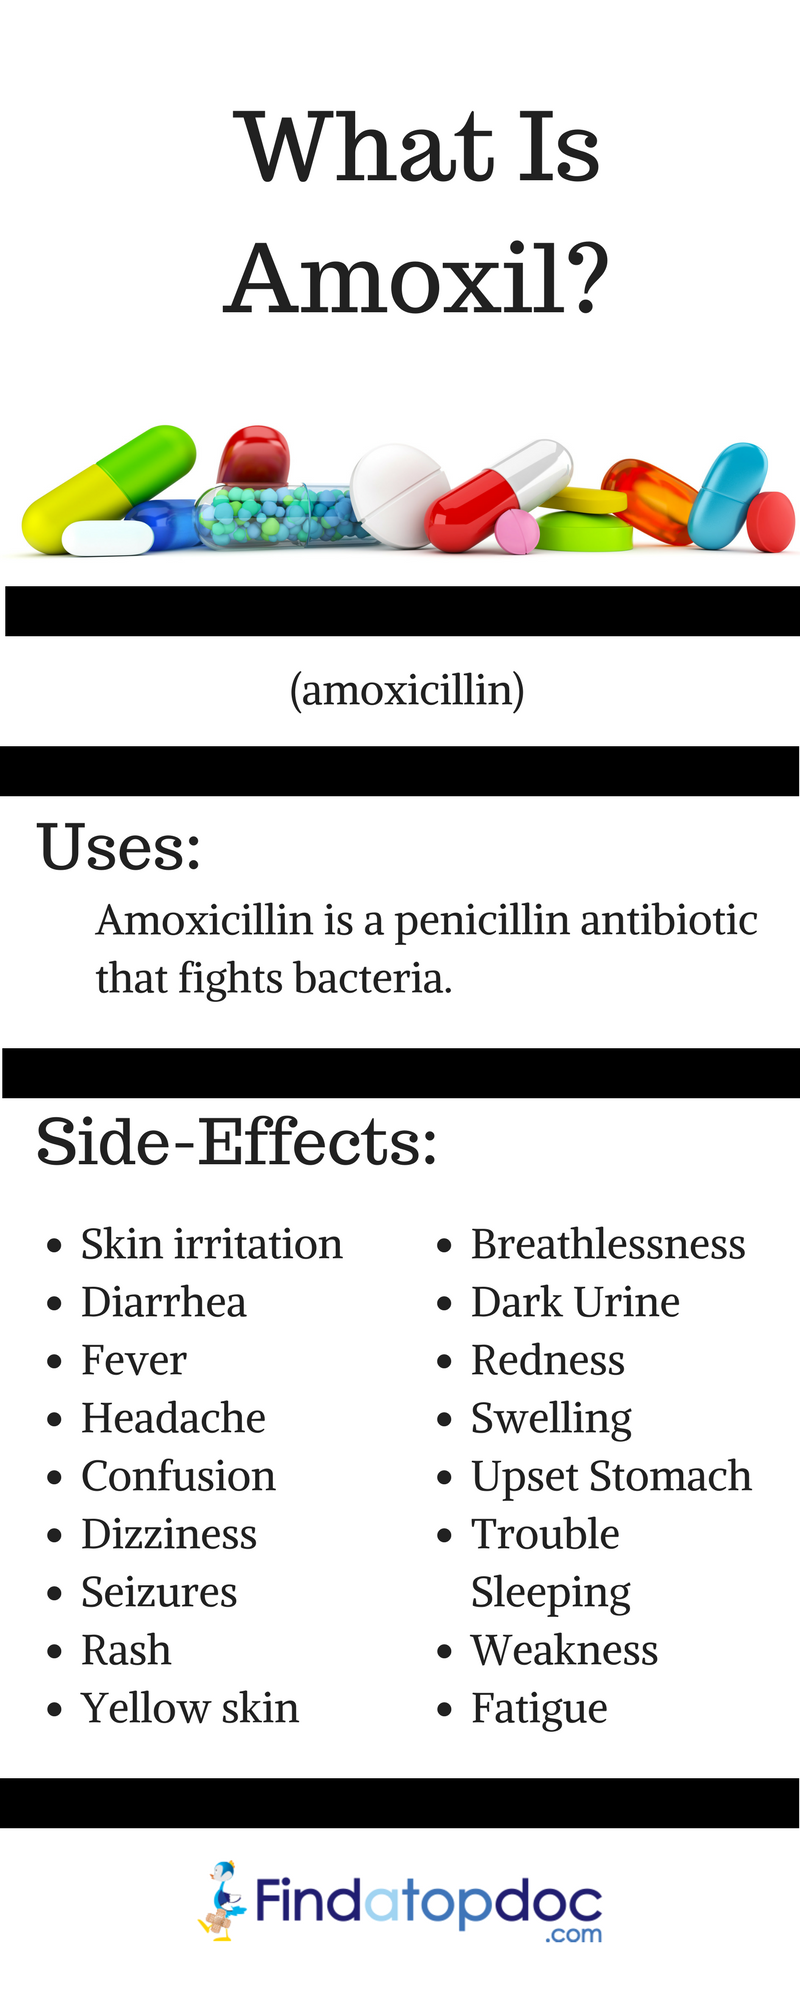 What Is Amoxil (Amoxicillin)?